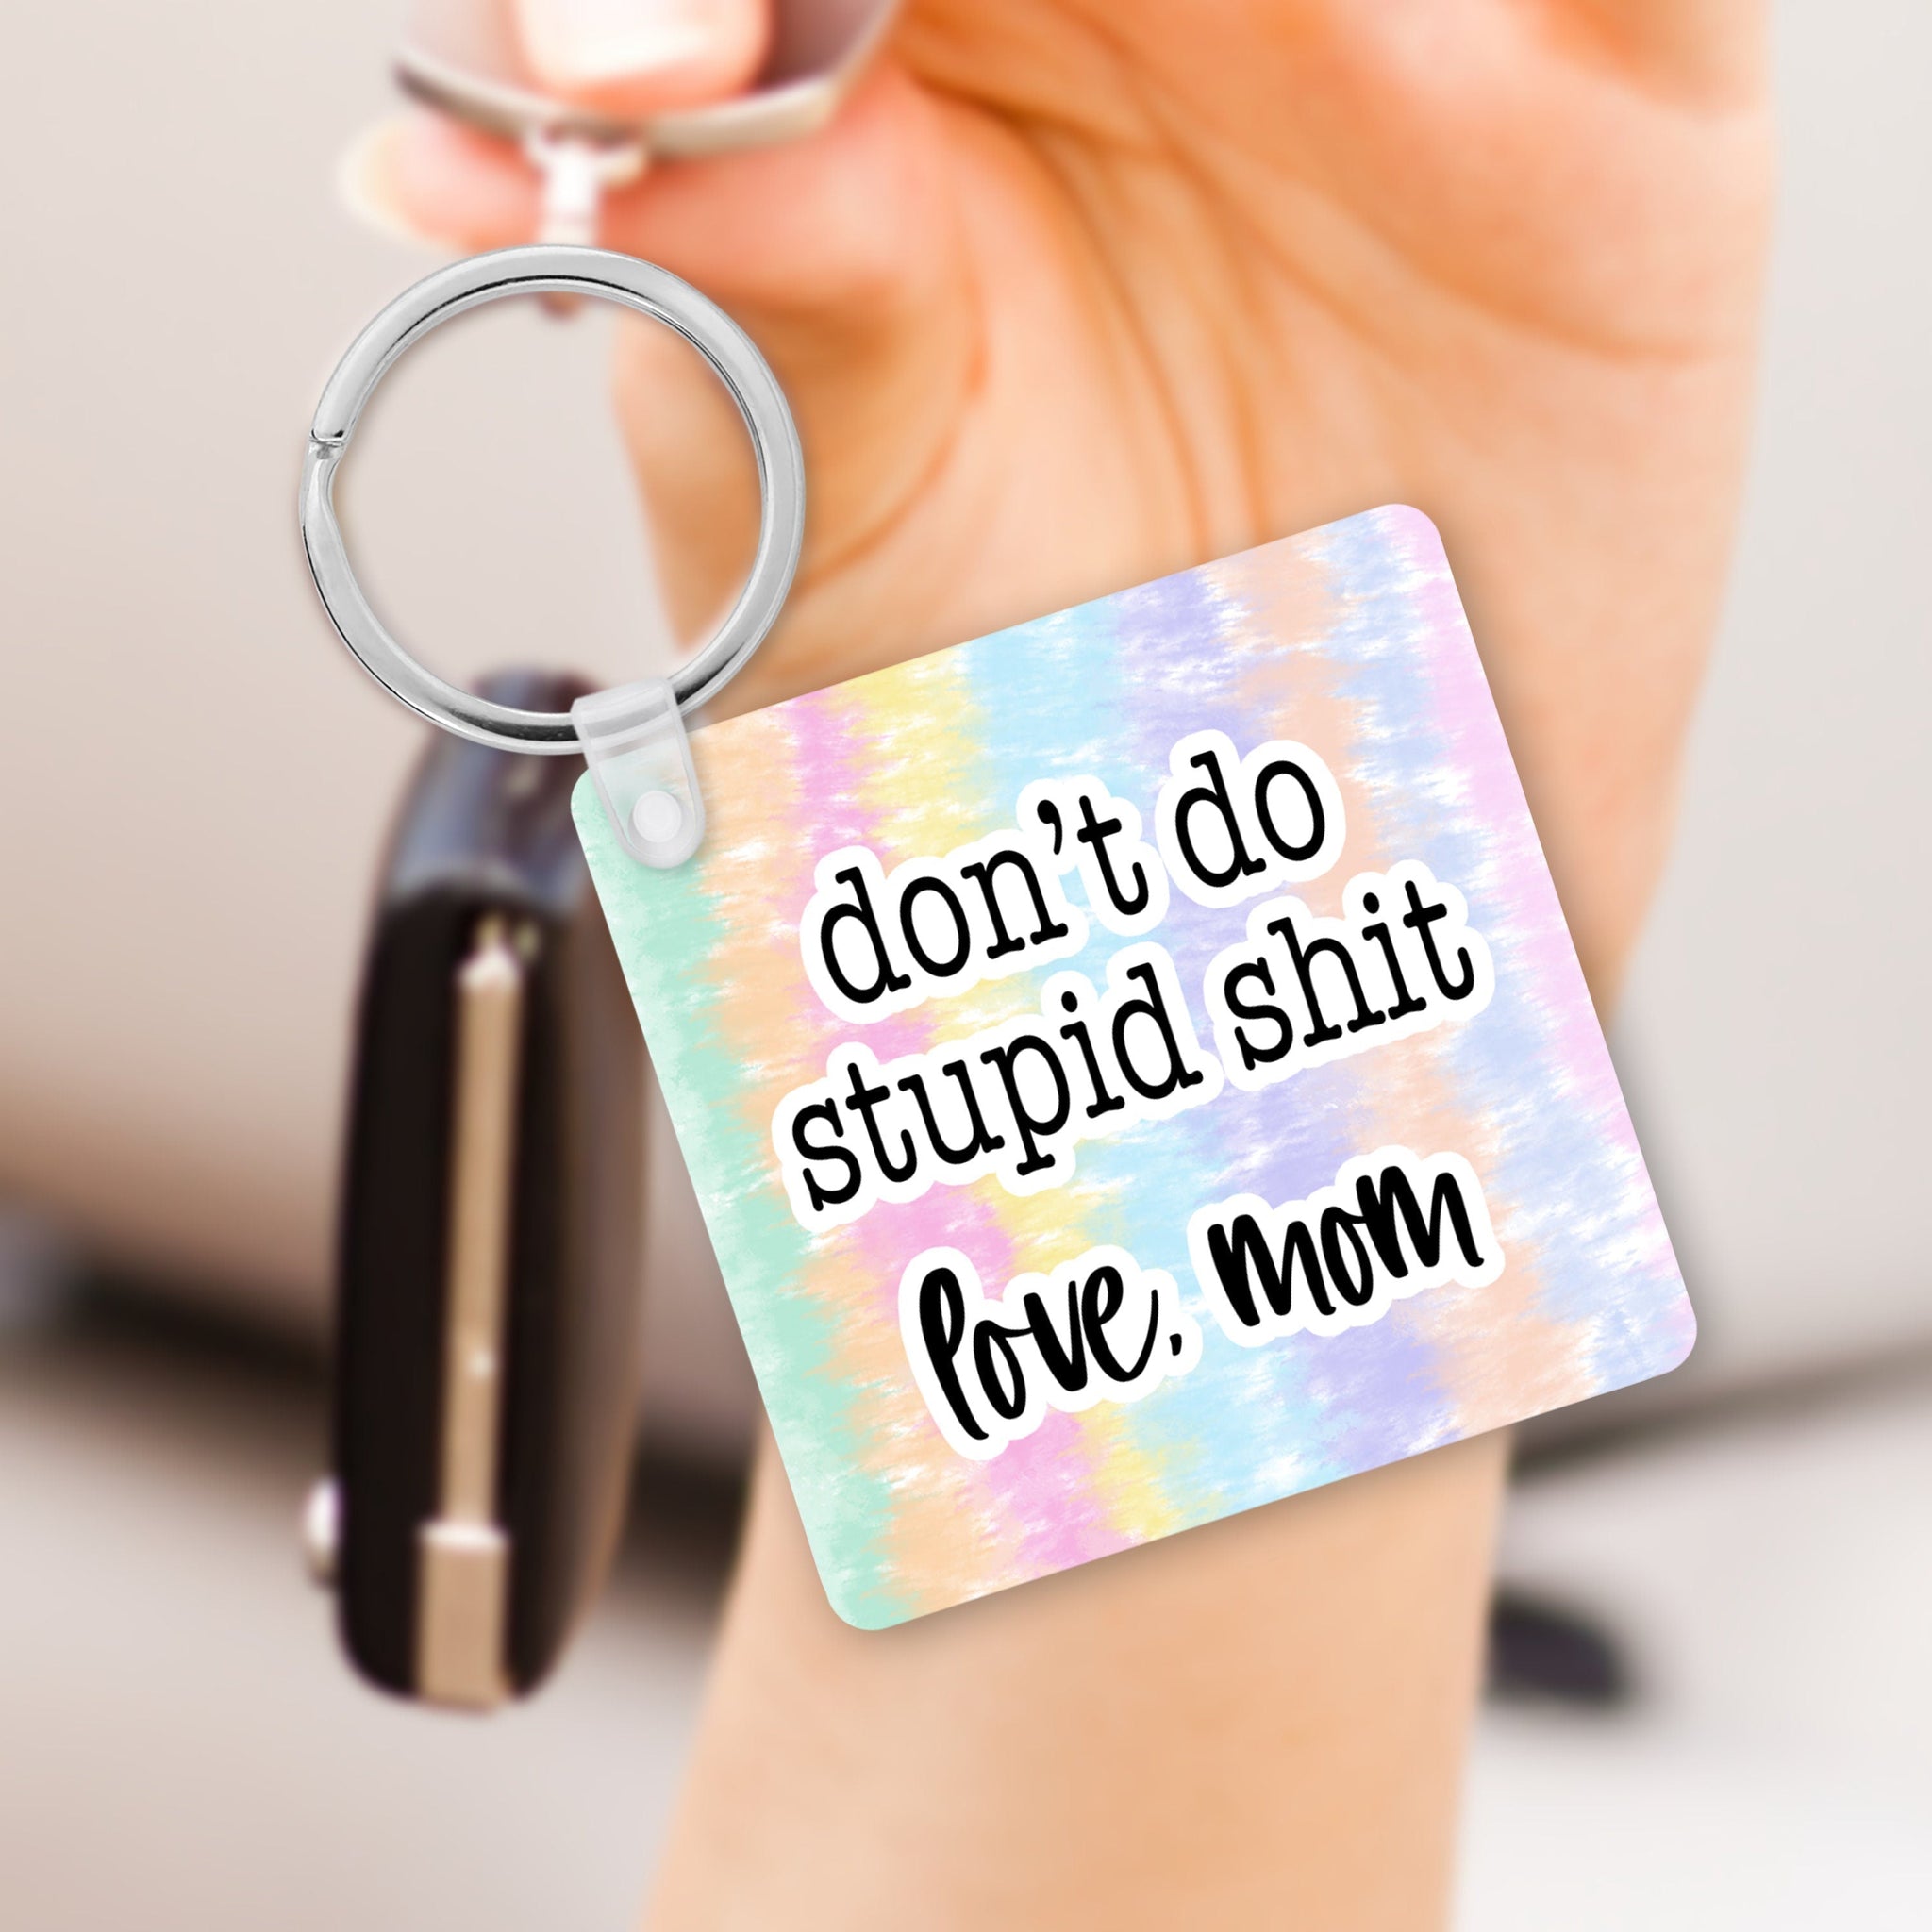 Don't Do Stupid Sh*t - Love Dad Keychain